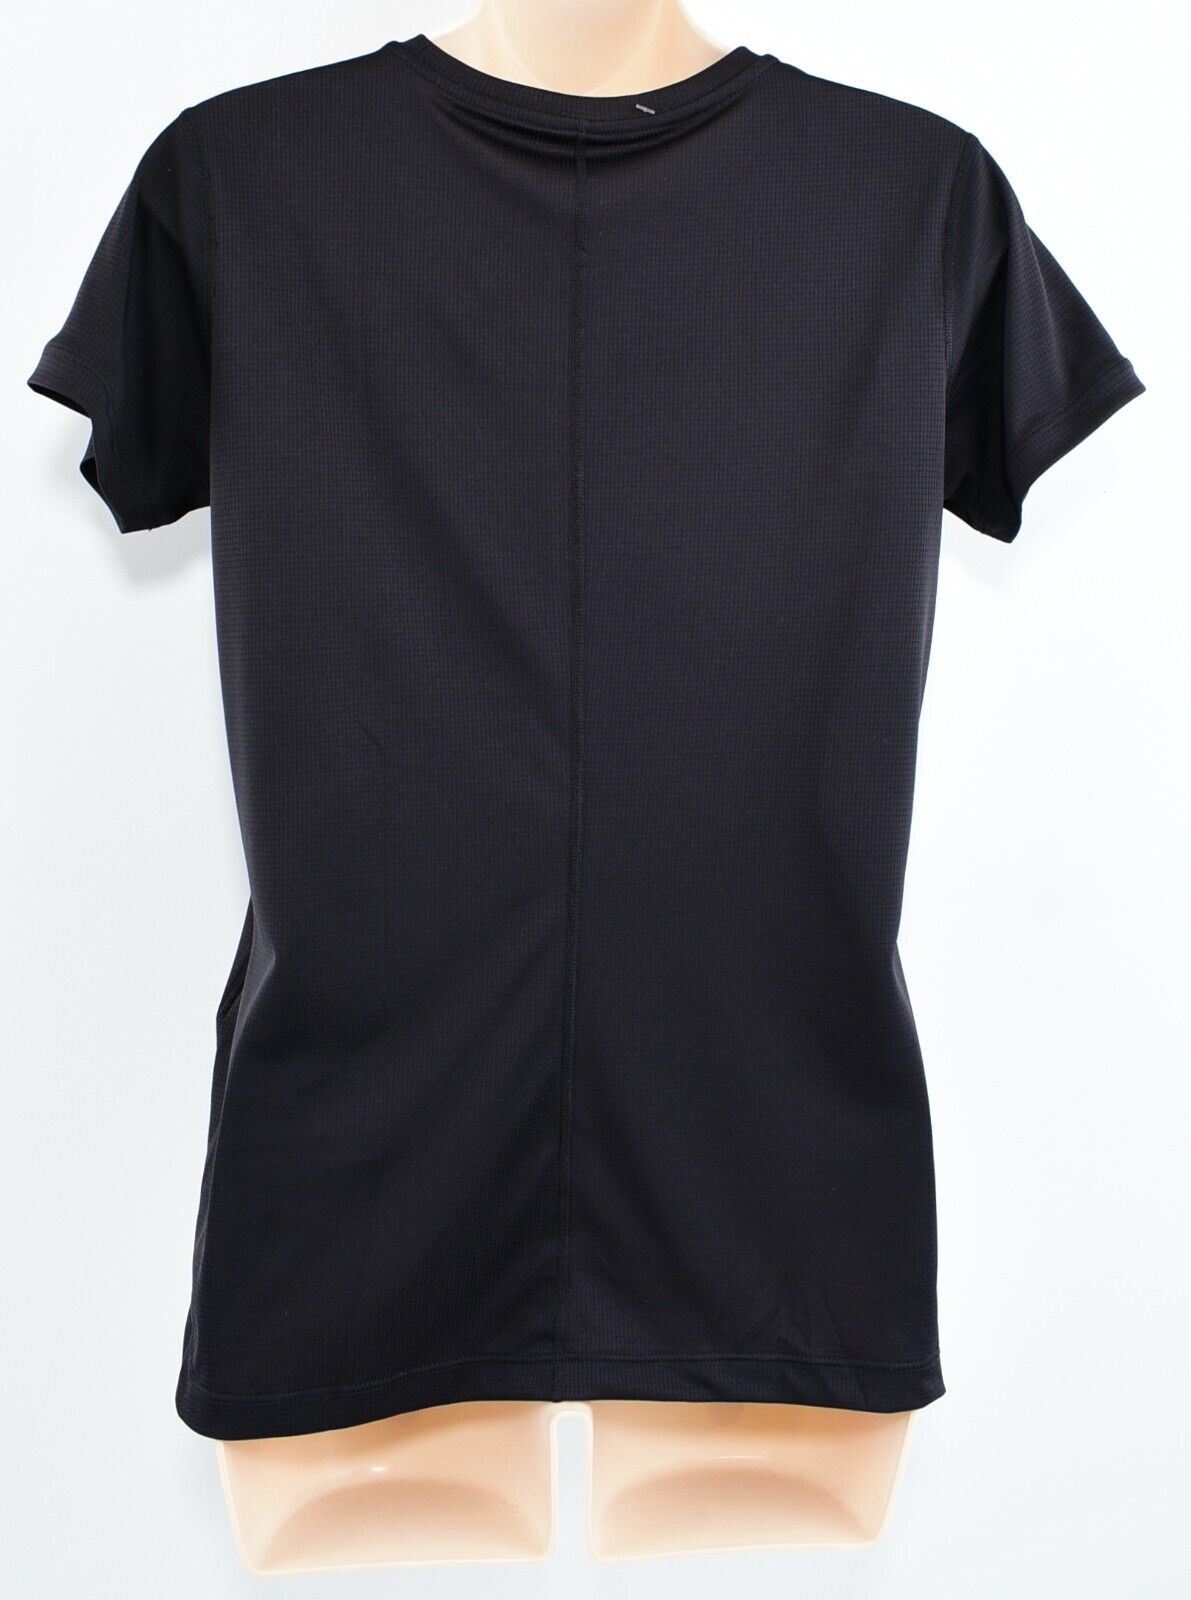 ASICS Performance Women's Core Running Top /T-shirt, Black, size S /UK 10